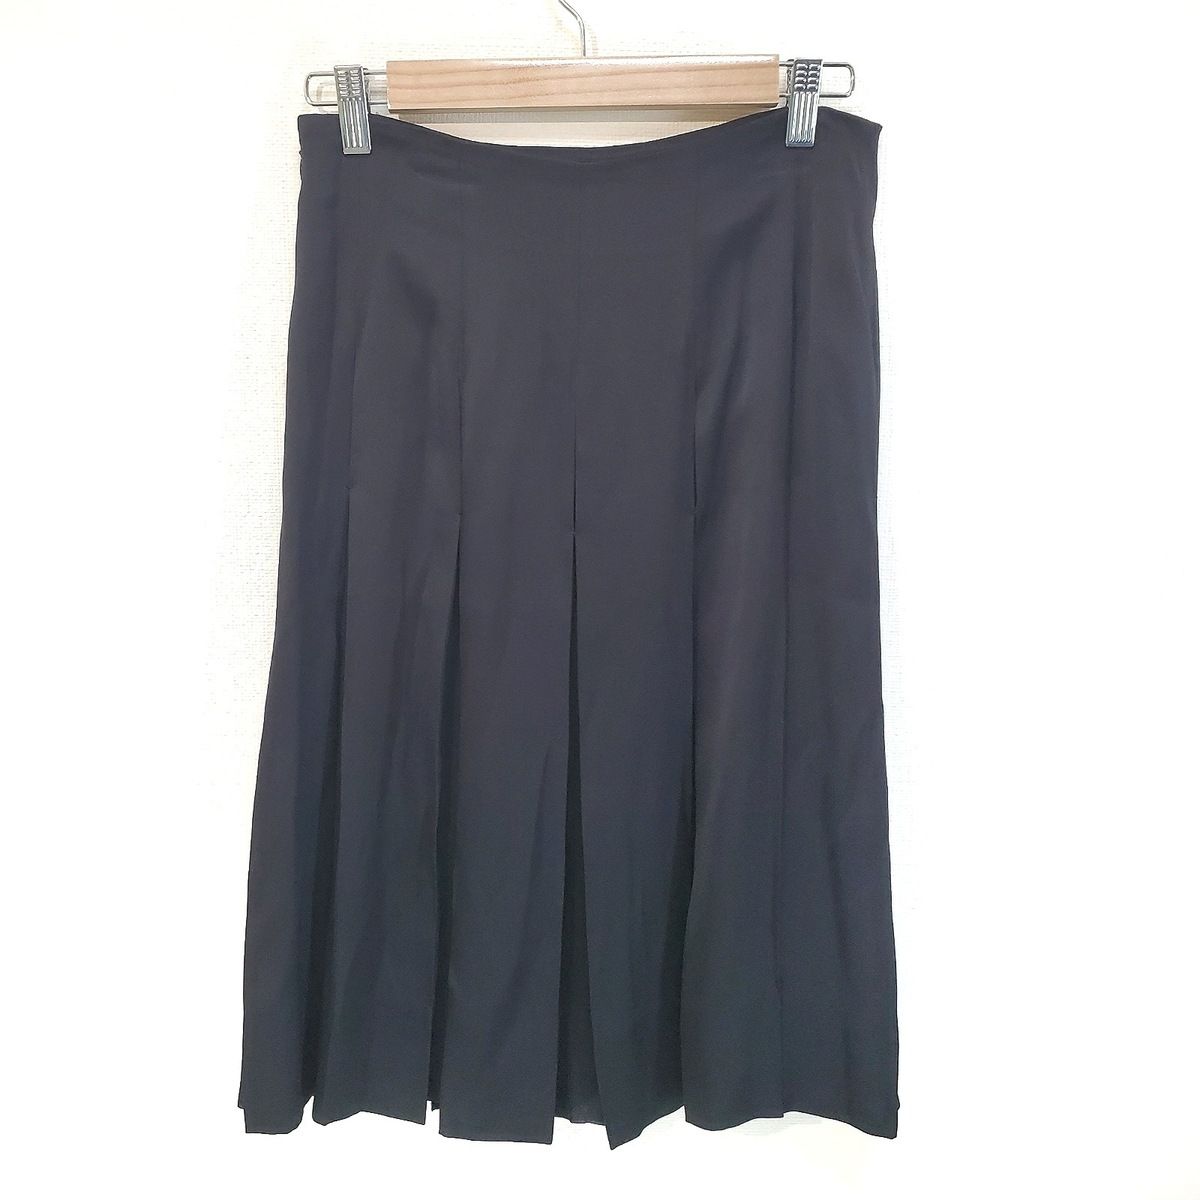 CELINE(セリーヌ) スカート サイズ36 S レディース美品 - 黒 ひざ丈 - メルカリ